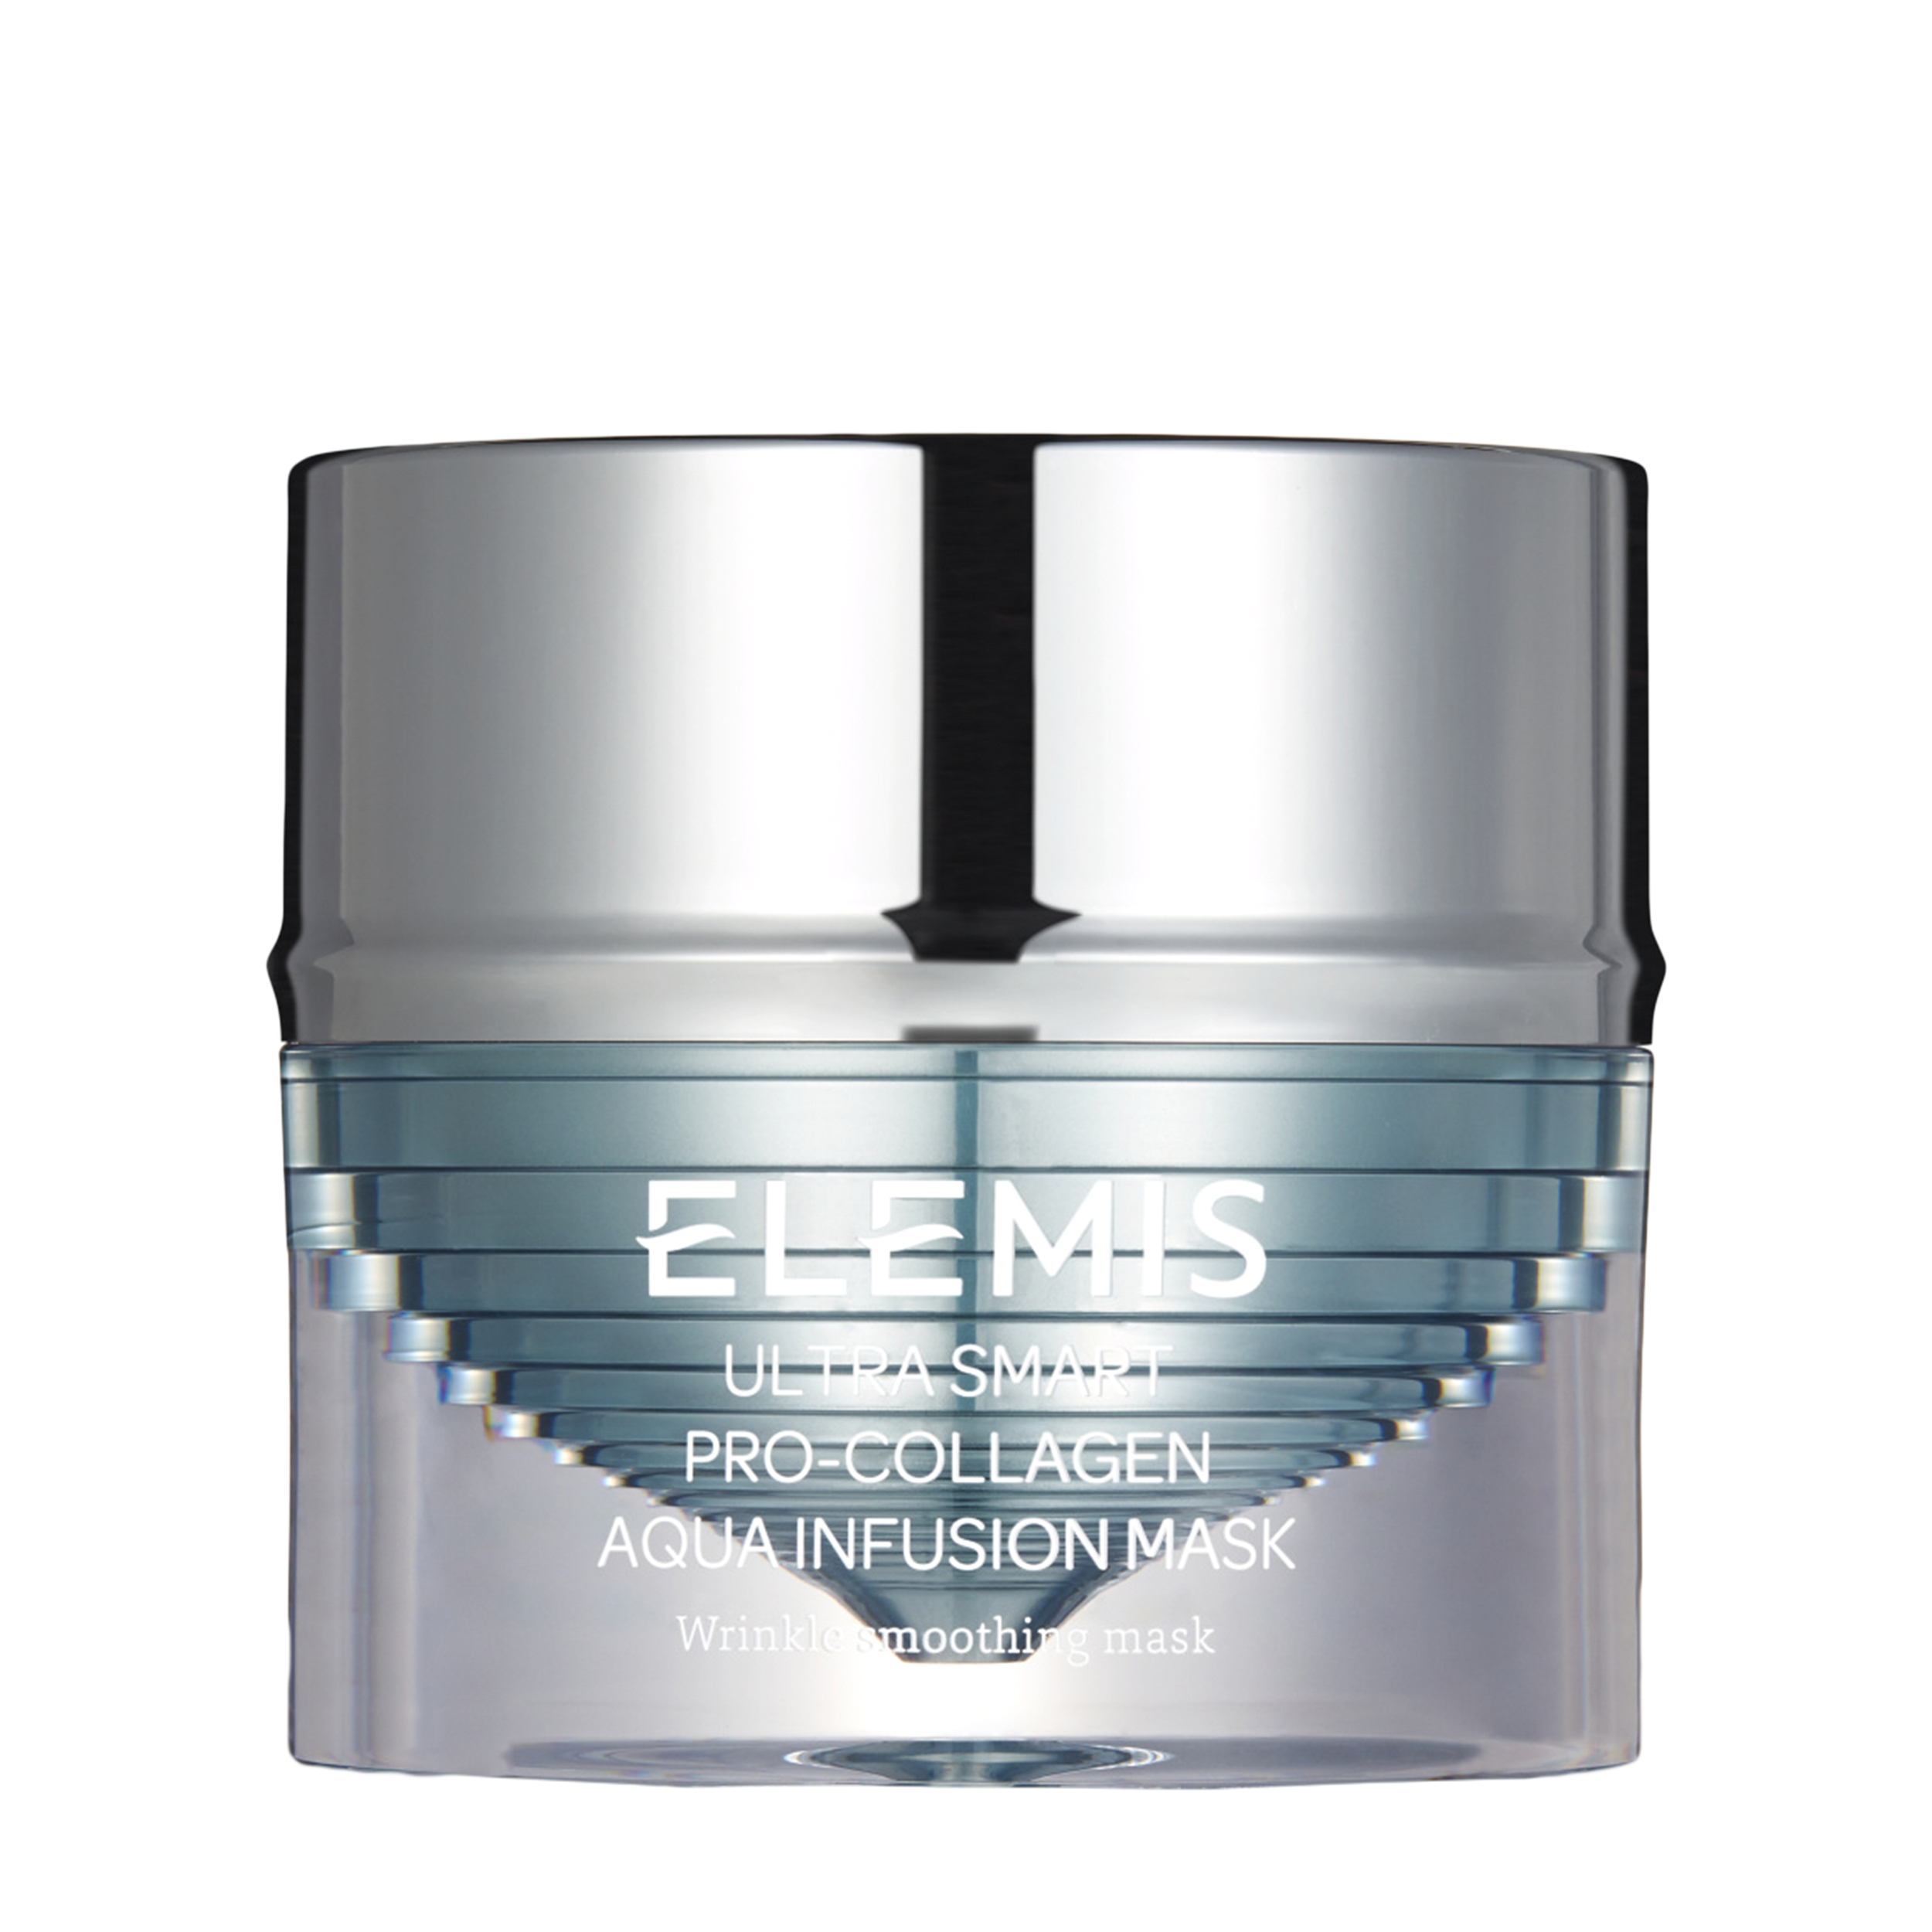 Elemis Elemis Увлажняющая маска против морщин для лица Ultra Smart Pro-Collagen Aqua Infusion Mask 50 мл EL50149 - фото 1